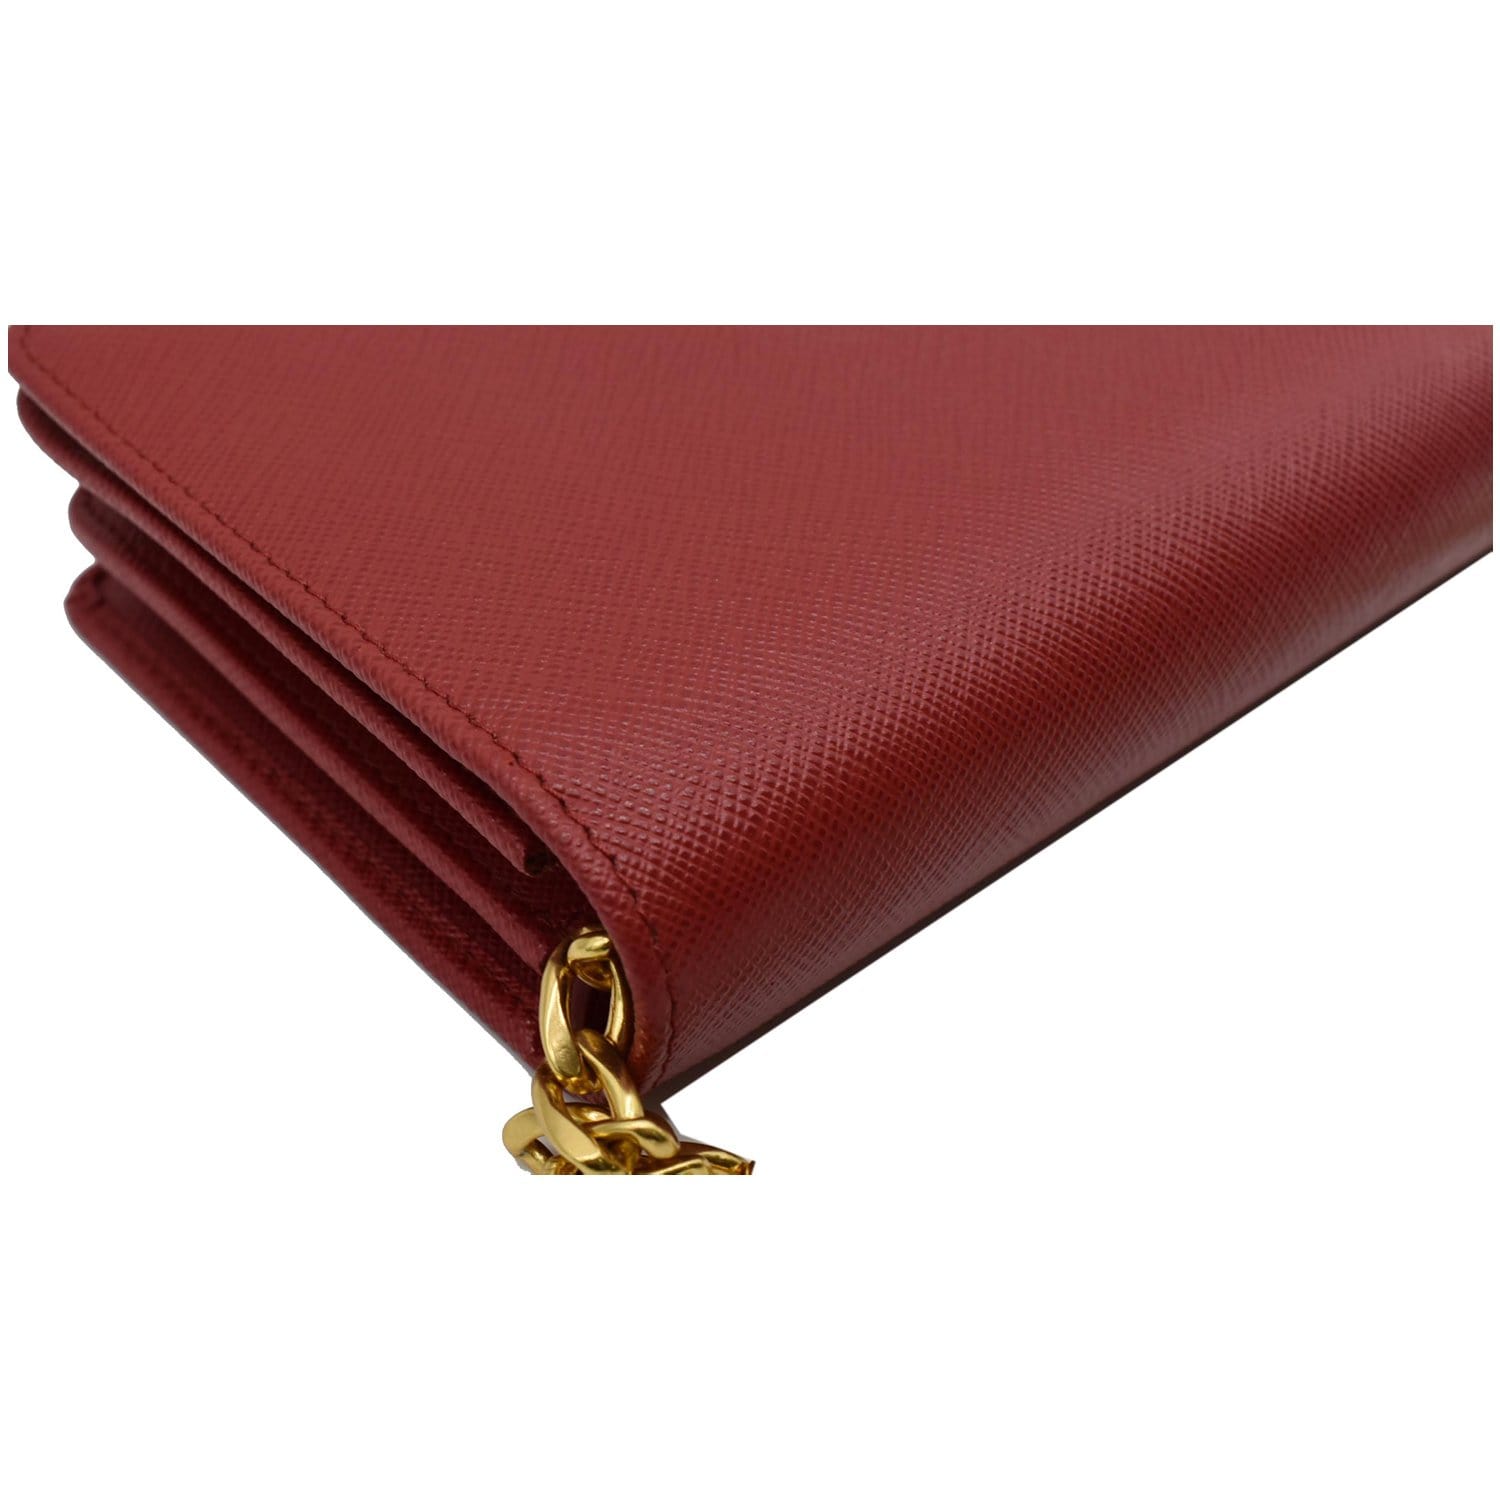 Prada Saffiano Heart Print Long Leather WOC Crossbody Bag